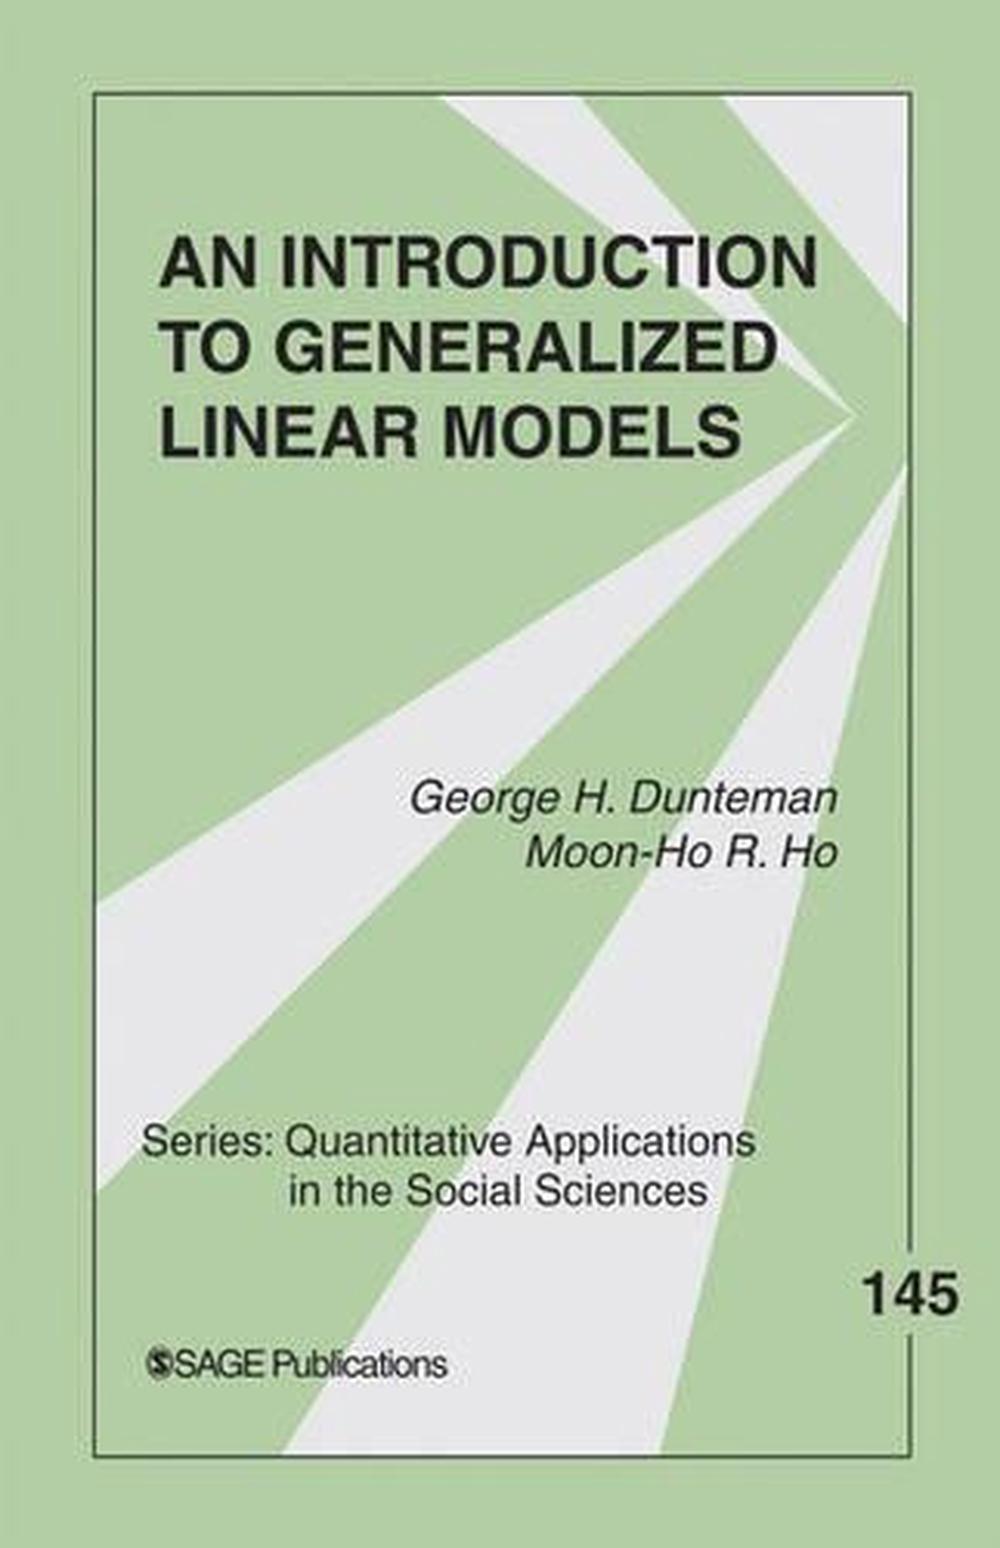 research paper on generalized linear model